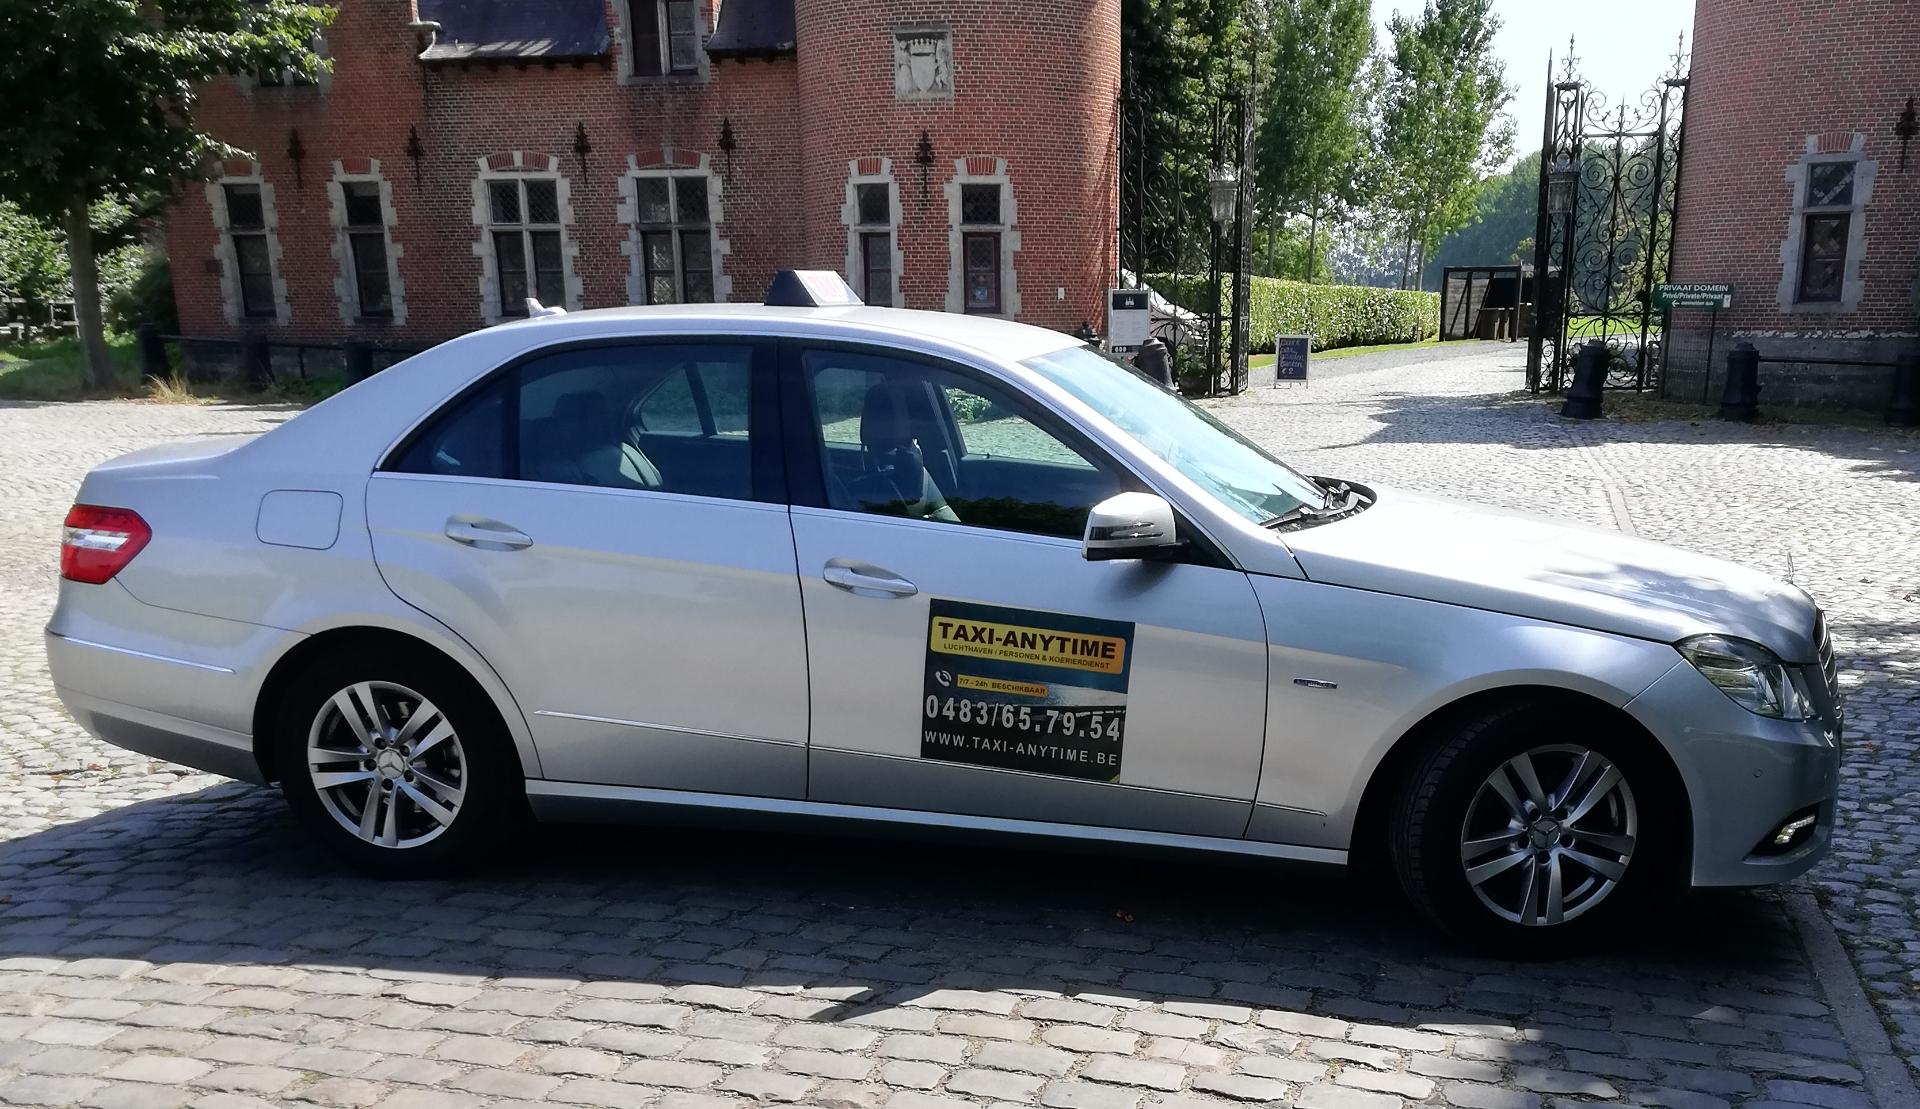 taxibedrijven Hansbeke Taxi Anytime